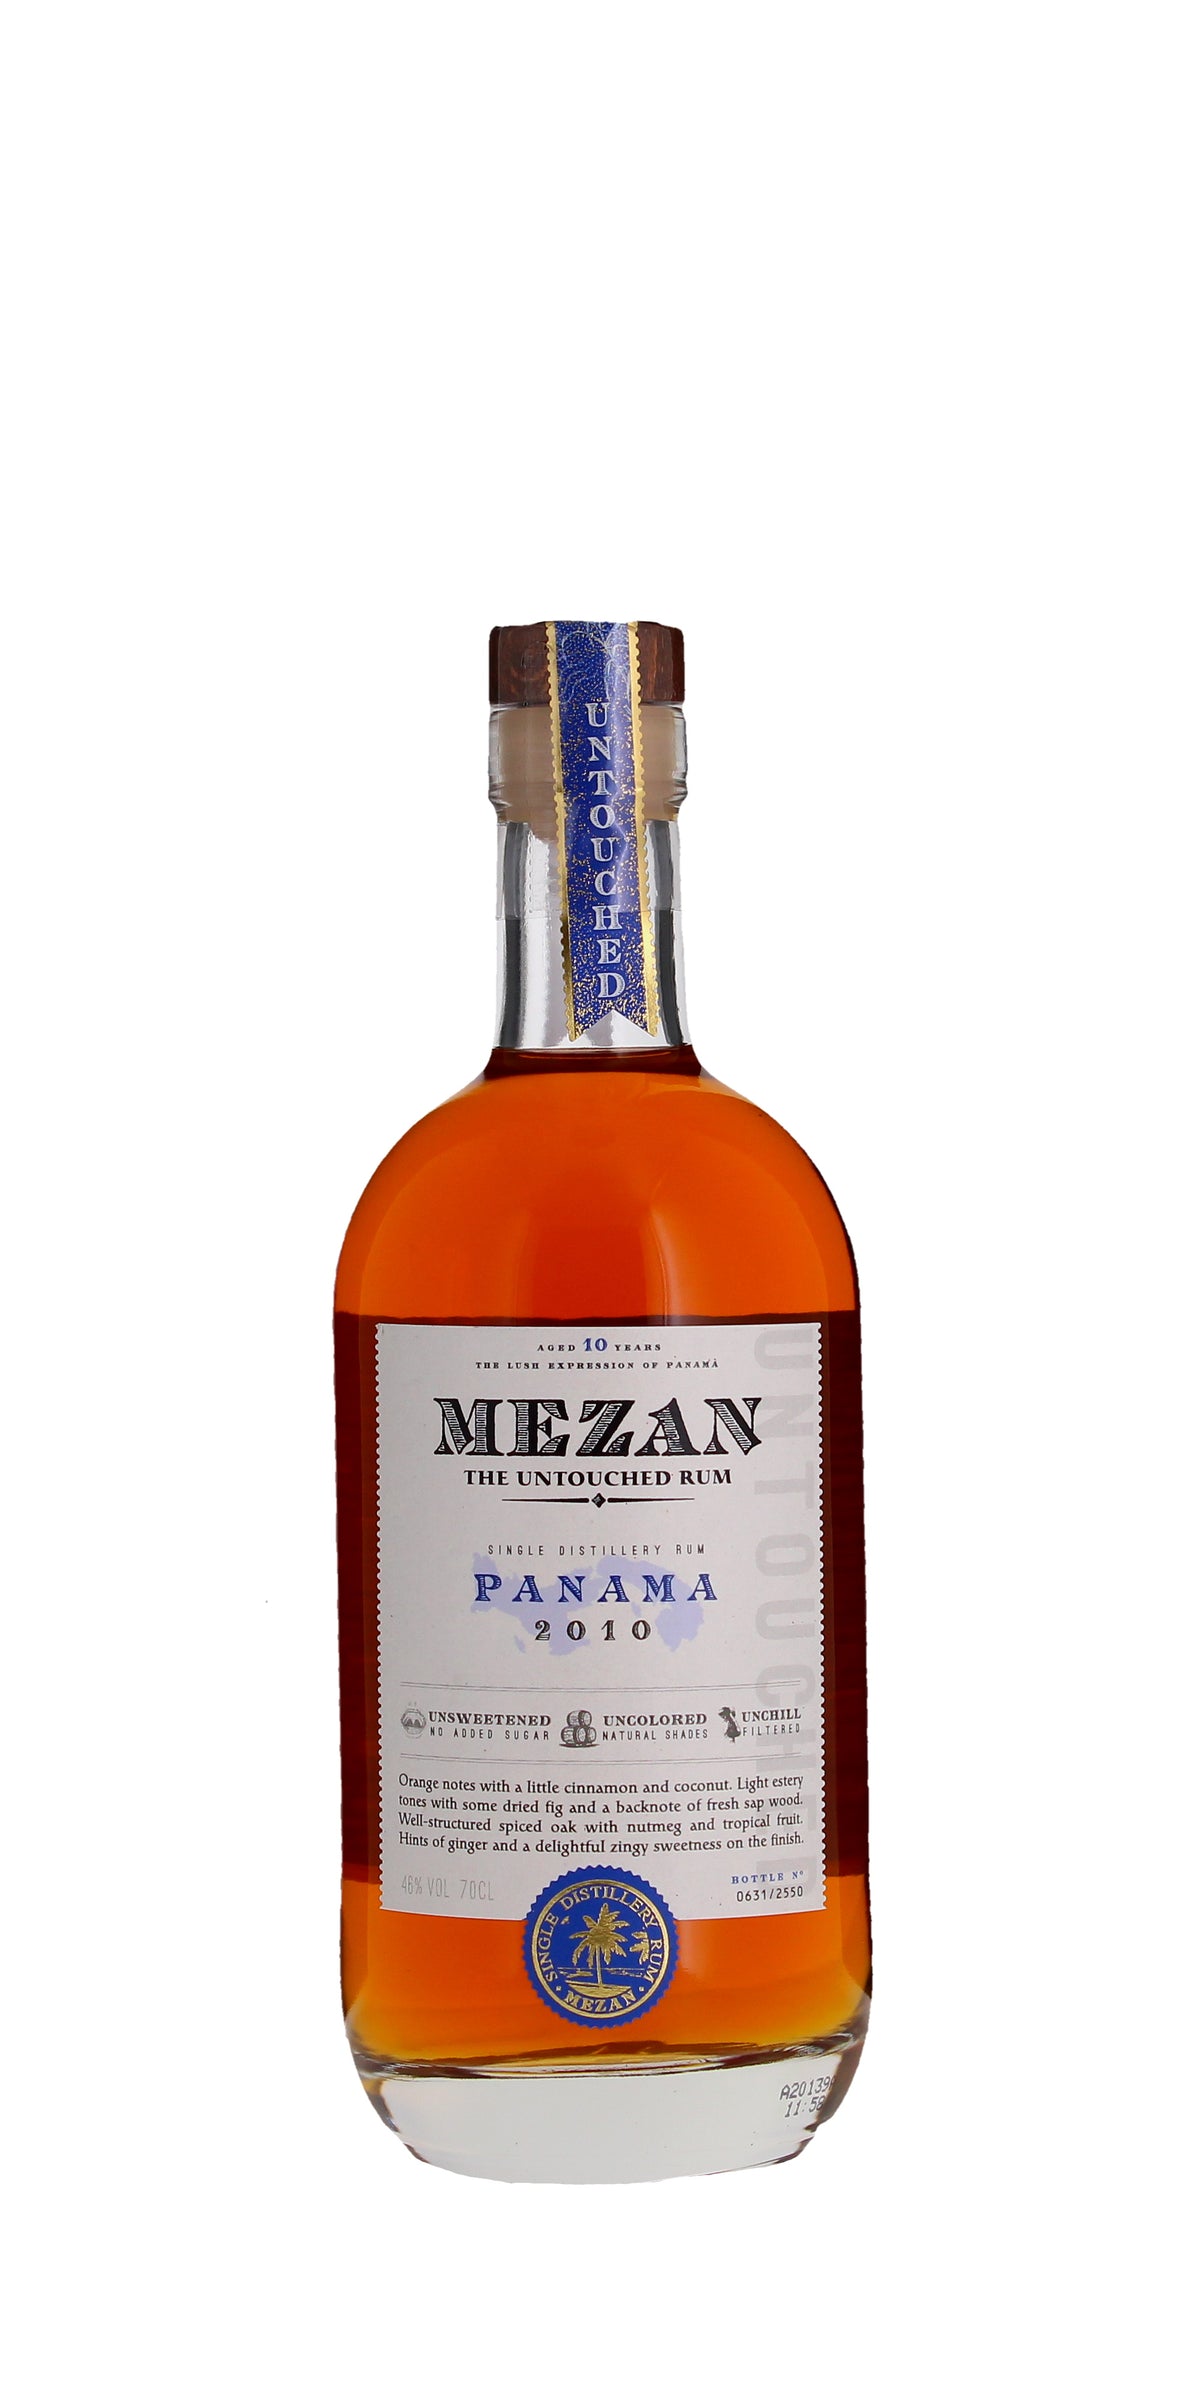 Mezan Panama Rum, 2010